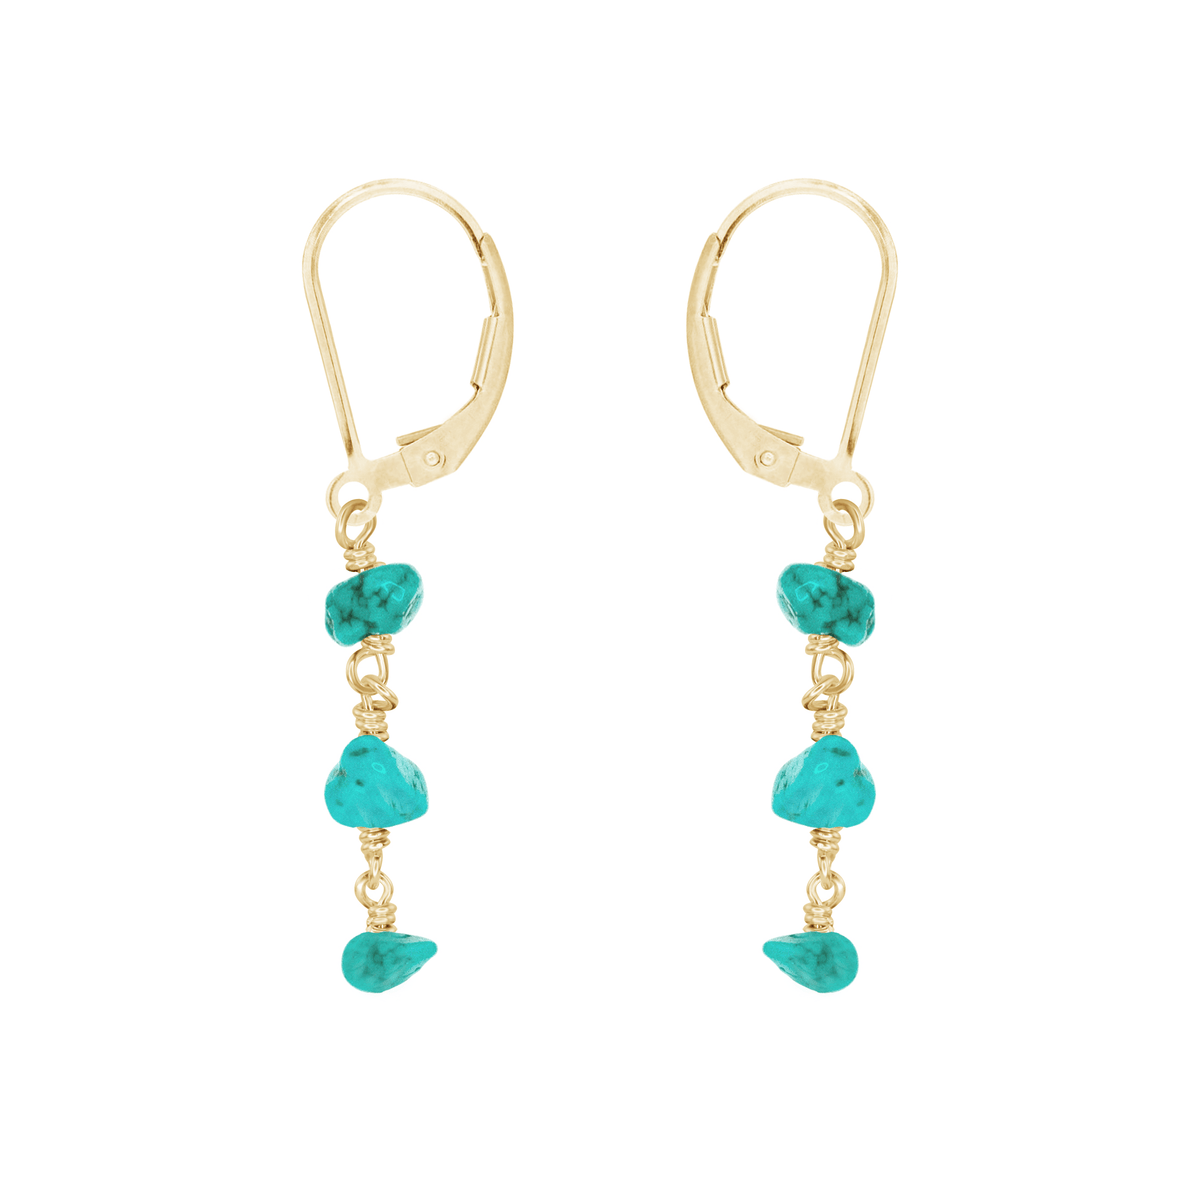 Turquoise Crystal Beaded Chain Dangle Leverback Earrings - Turquoise Crystal Beaded Chain Dangle Leverback Earrings - 14k Gold Fill - Luna Tide Handmade Crystal Jewellery